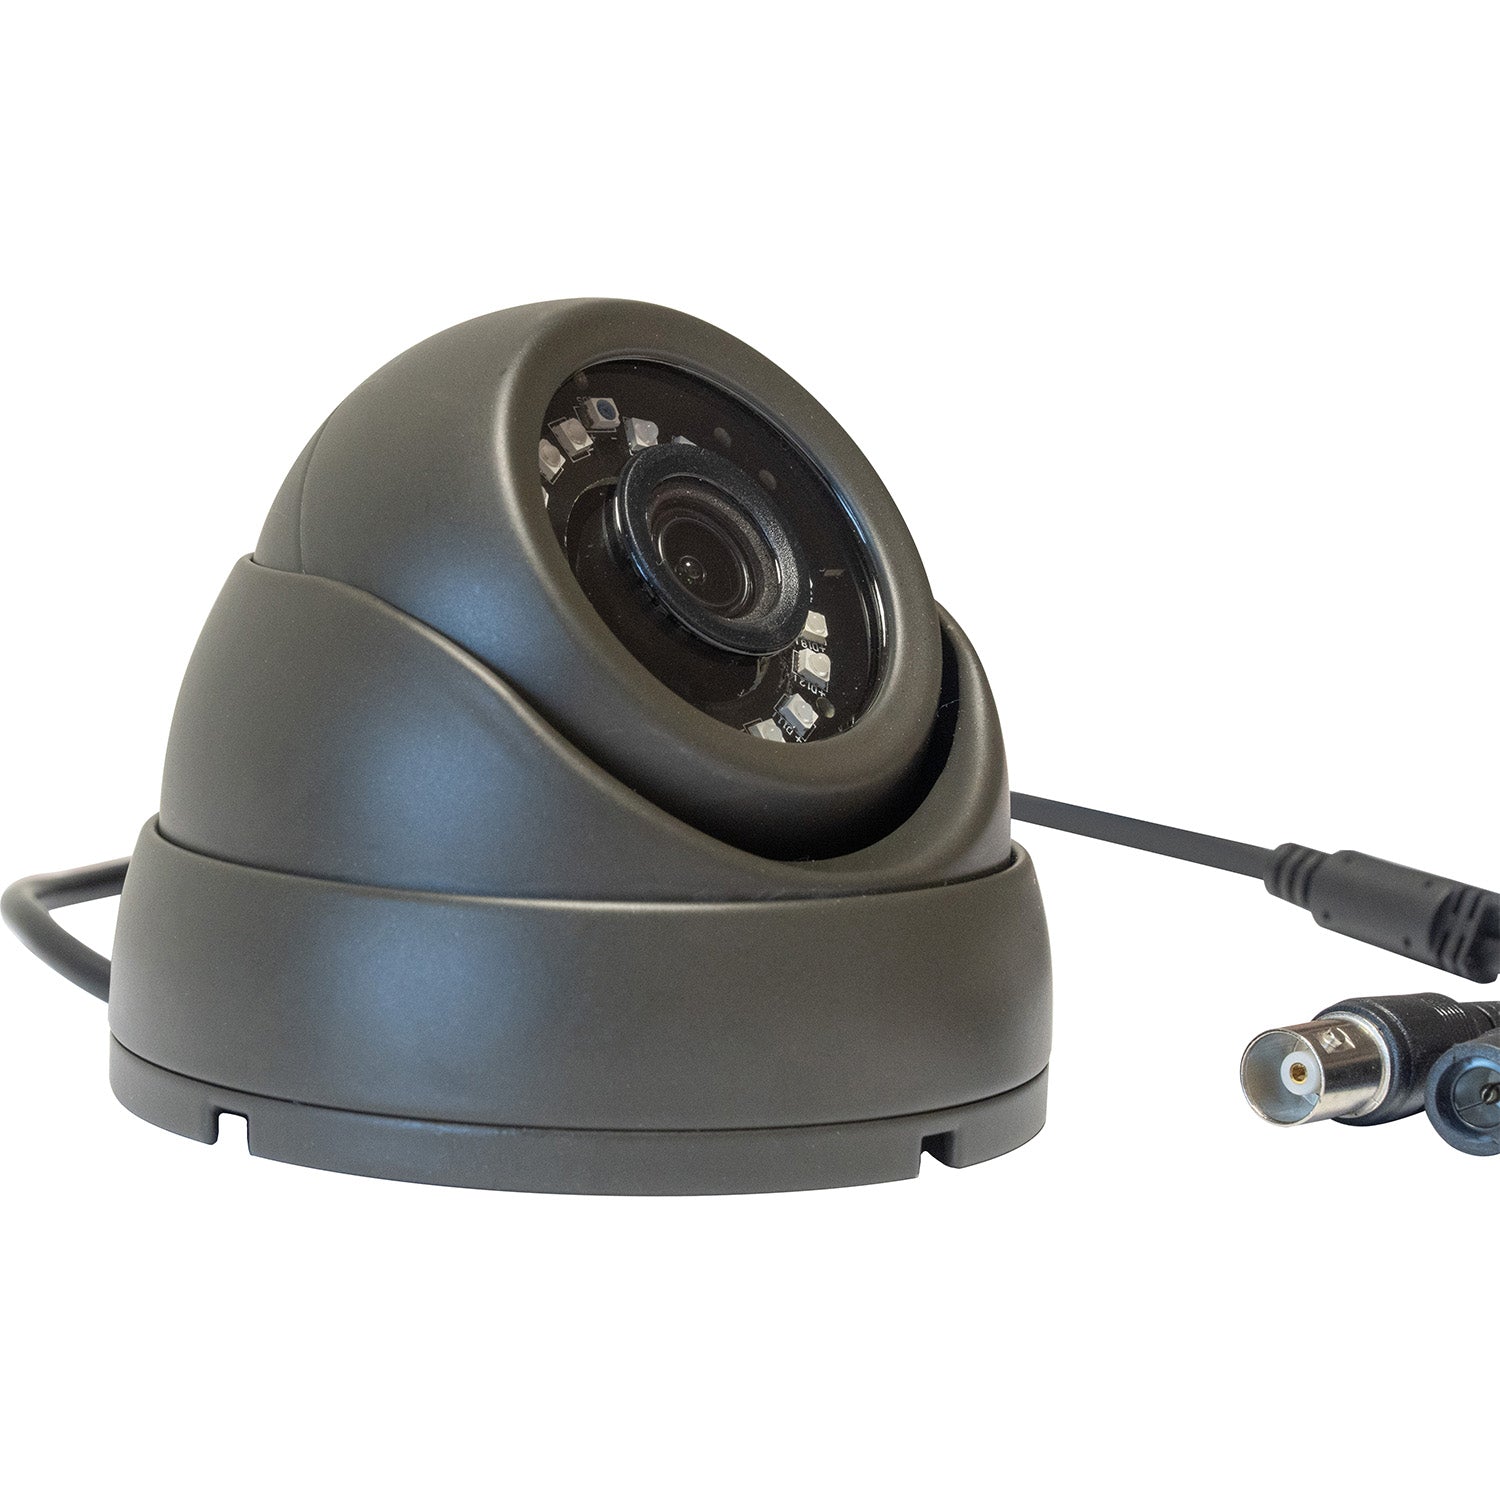 5MP CCTV Security Dome Camera - Grey (SC-5MP-DG-D)